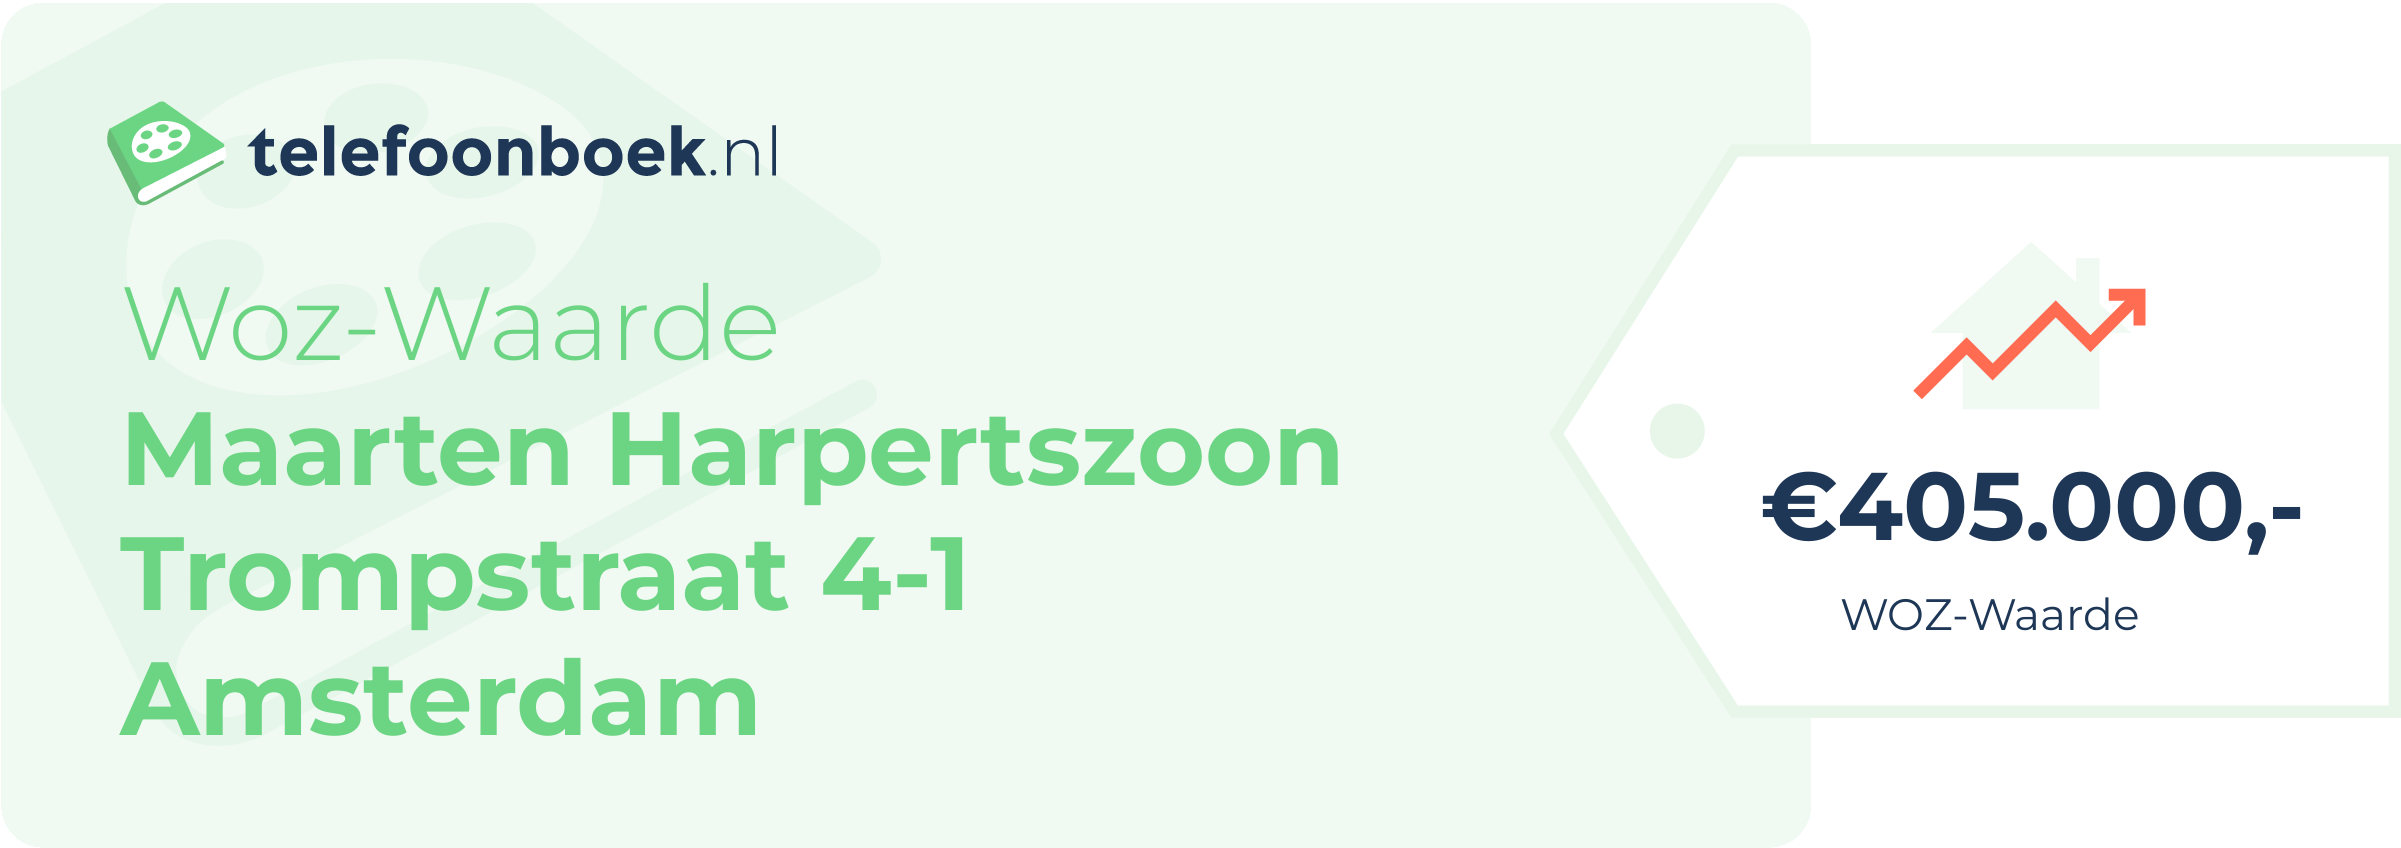 WOZ-waarde Maarten Harpertszoon Trompstraat 4-1 Amsterdam